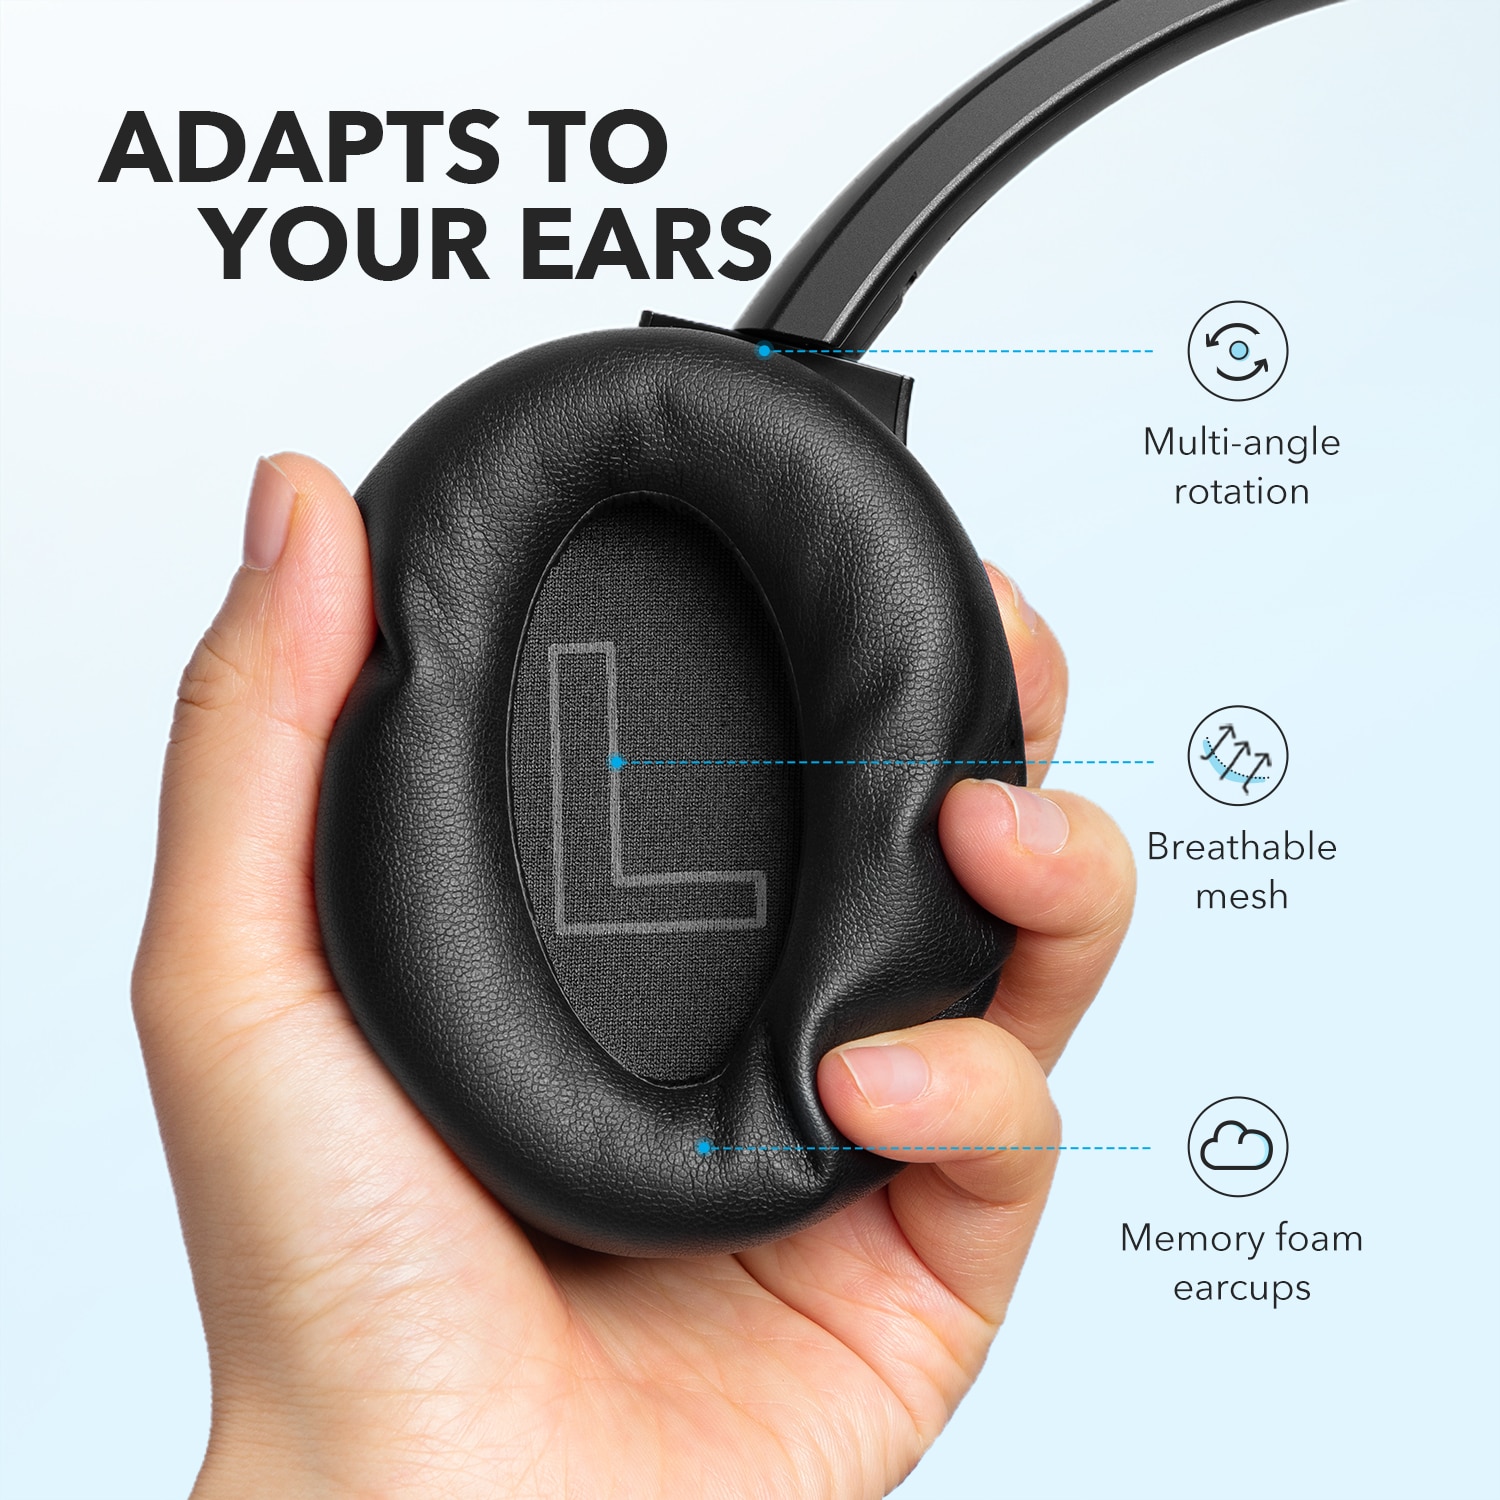 Anker Soundcore Q20+ ANC Wireless Headphones